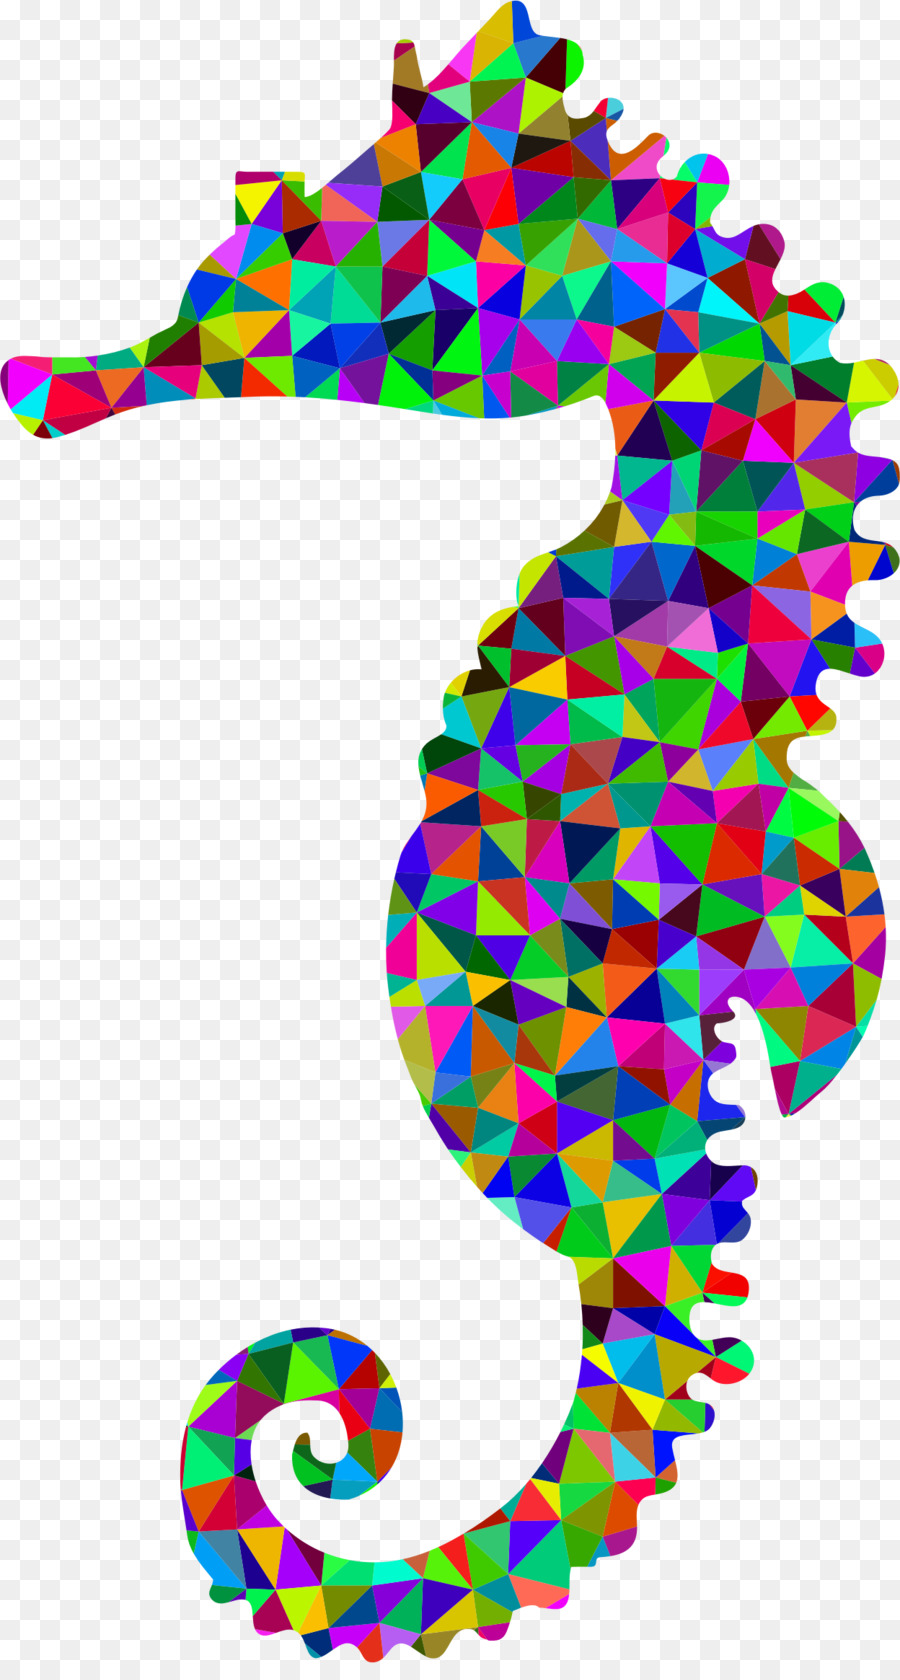 Seahorse Silhouette Clip art - seahorse png download - 1248*2306 - Free Transparent  Seahorse png Download.